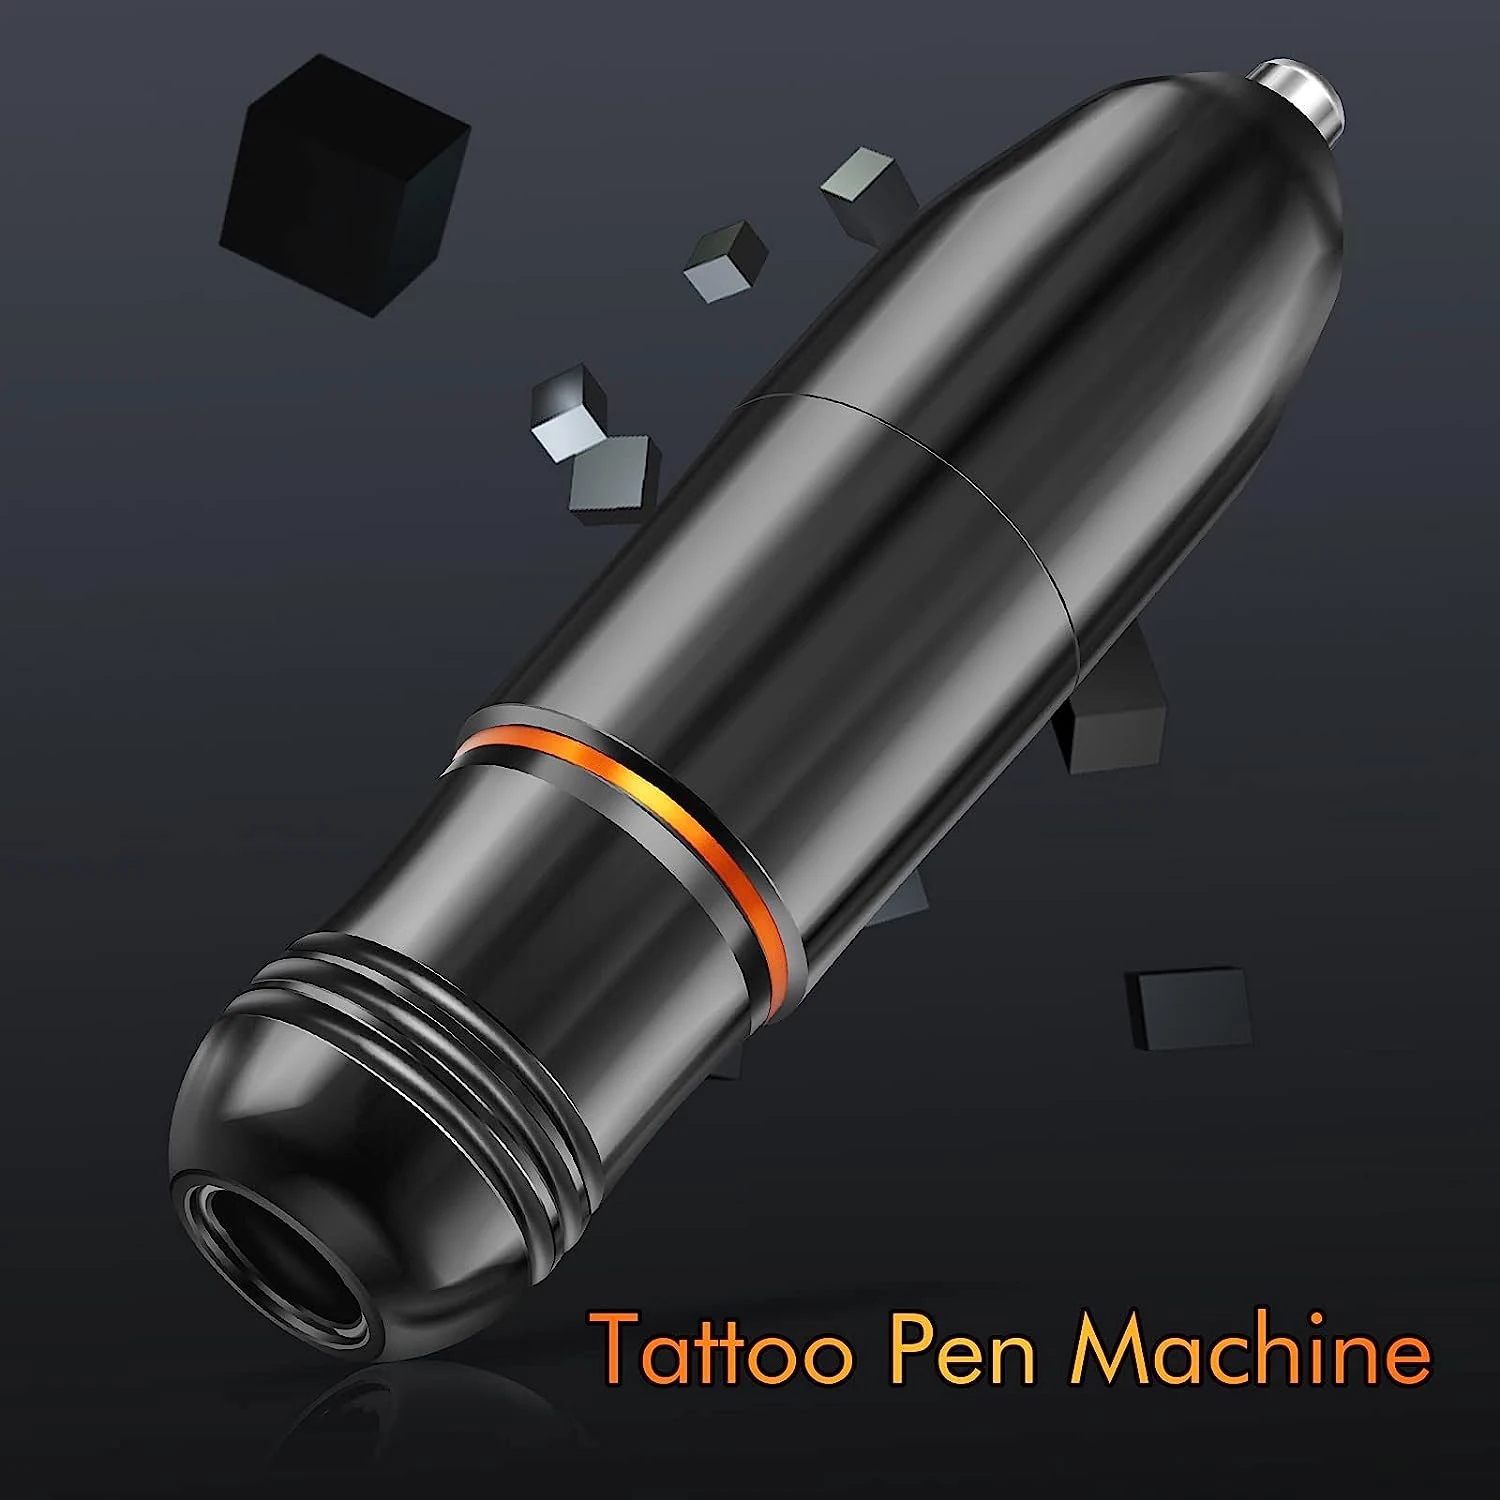 3PC Tattoo Mach ine Kit for Beginners Professional Tattoo Gun Kit with  Everything 30PC Tattoo Need les 5RL 5M1 Complete Tattoo Supply Kit 20PC  Tattoo